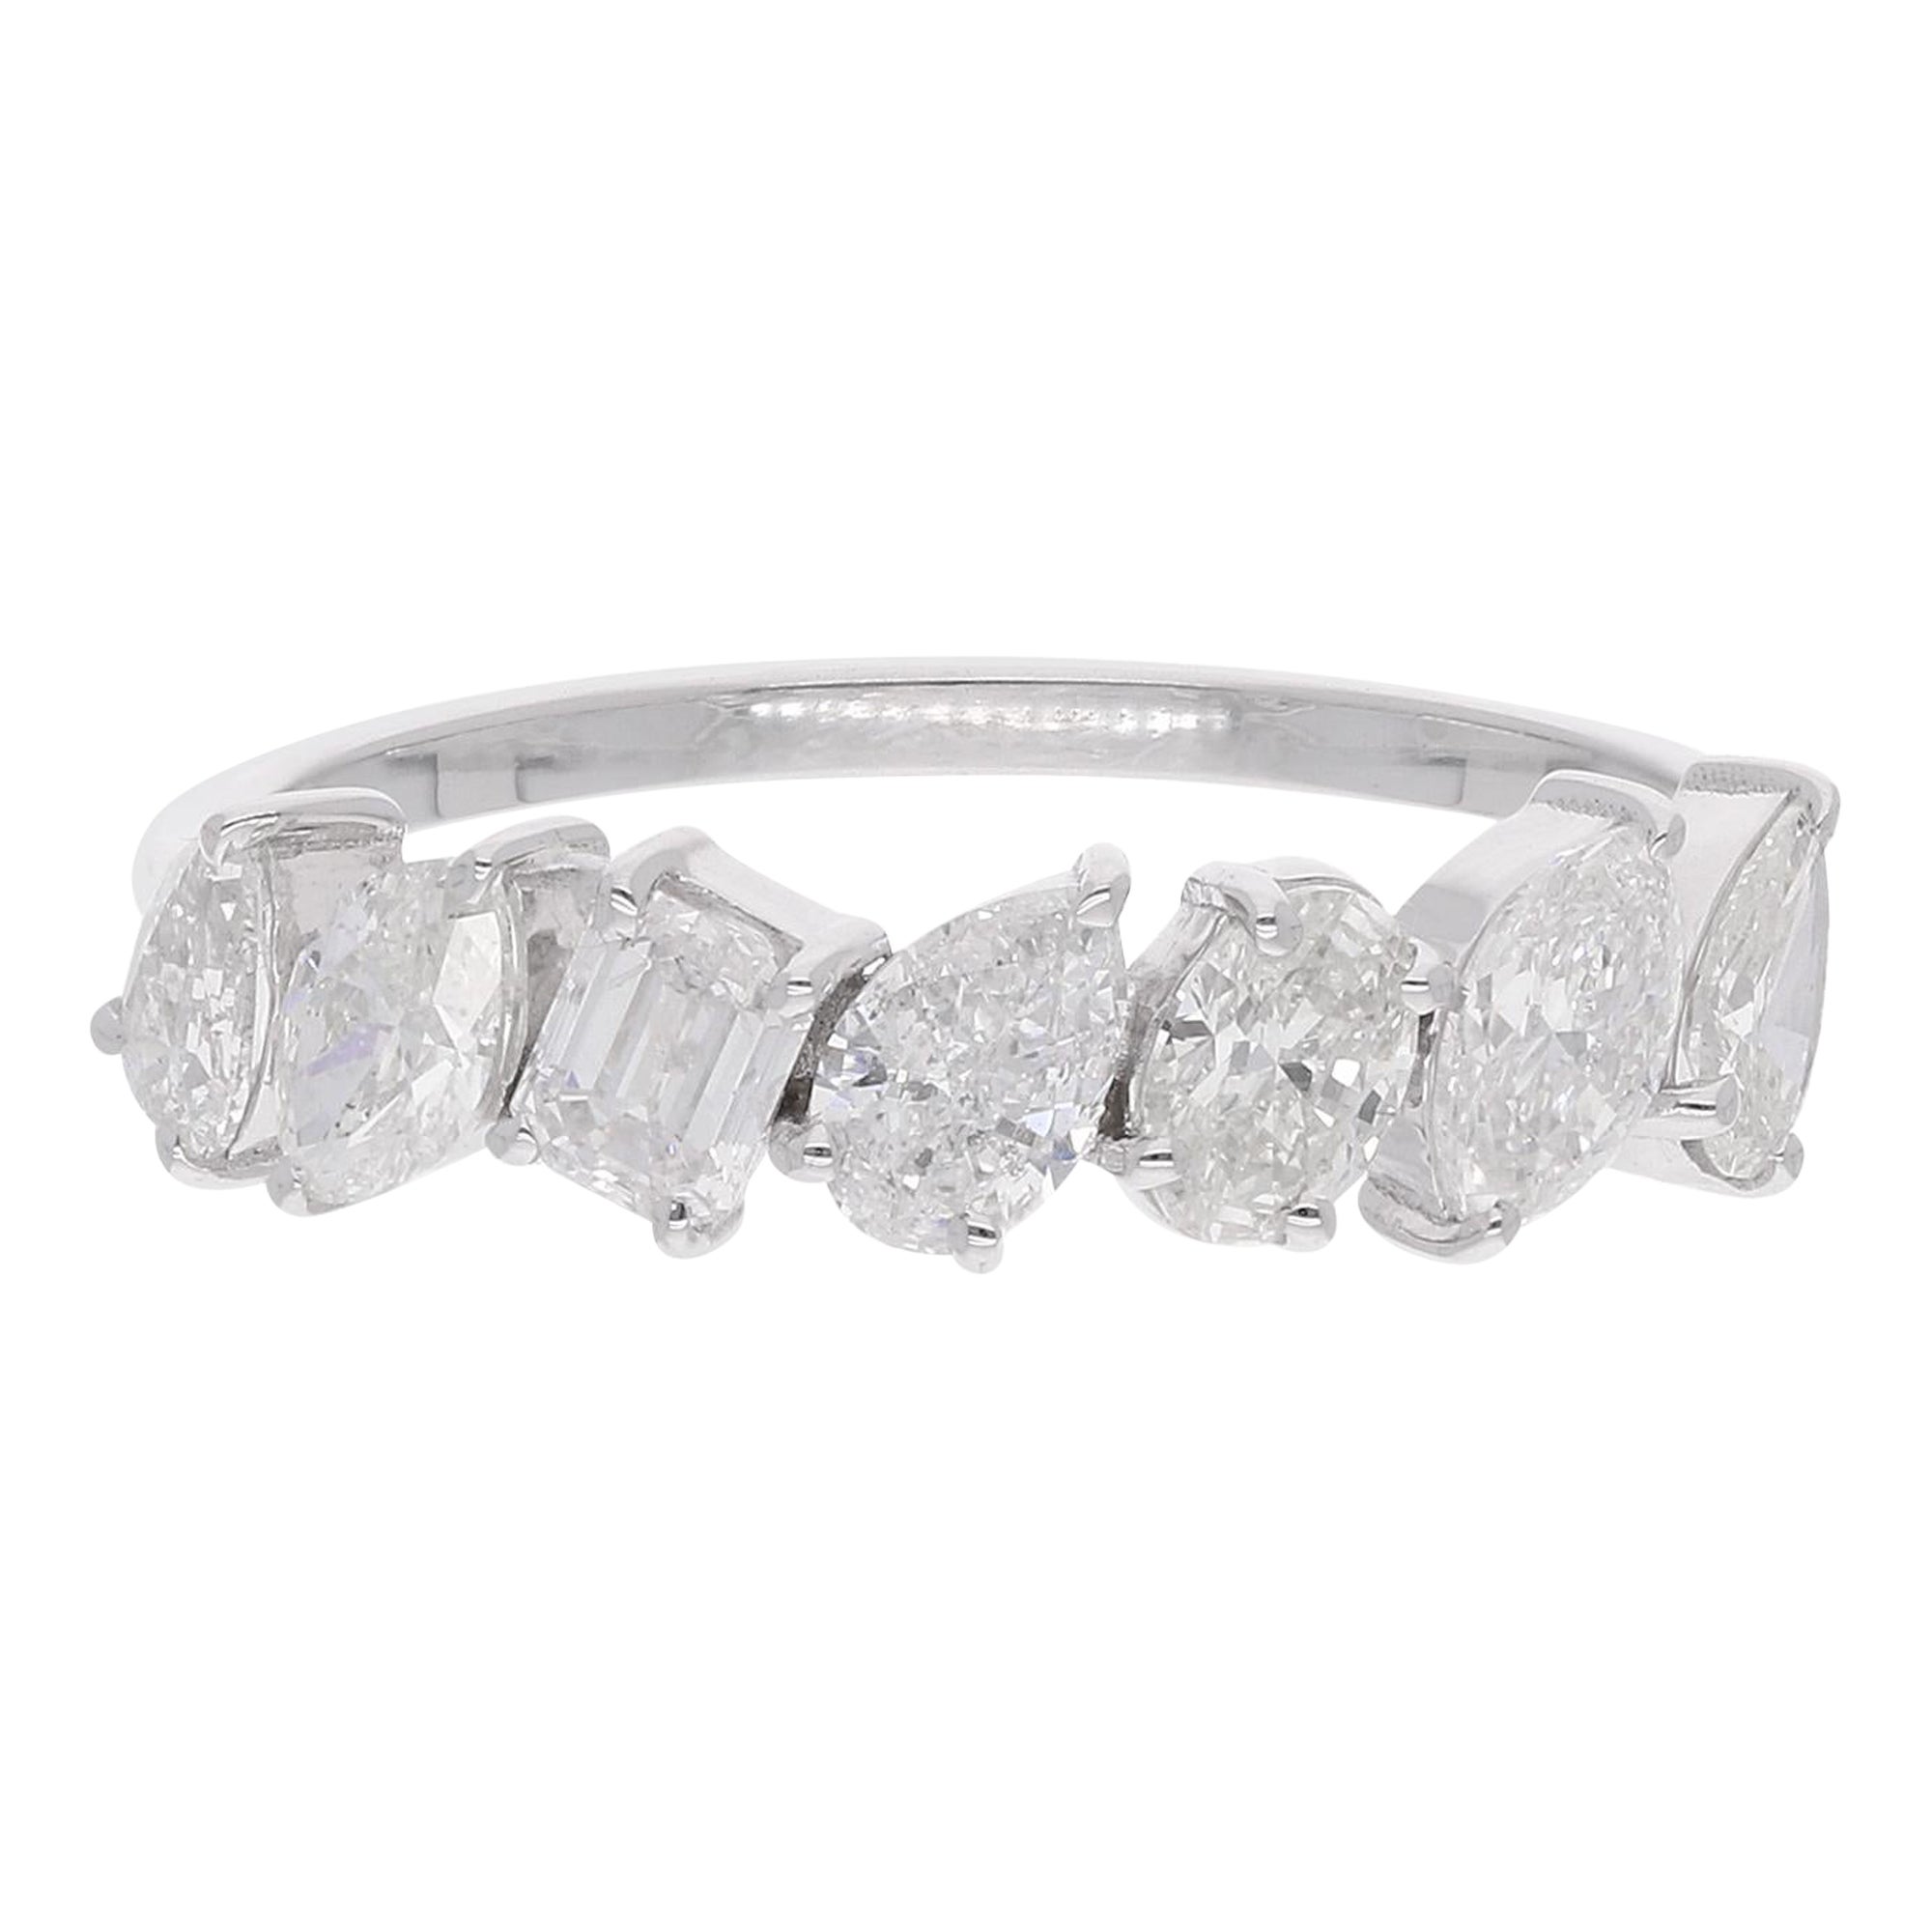 Oval Pear & Emerald Cut Diamond Ring 18 Karat White Gold Handmade Fine Jewelry For Sale